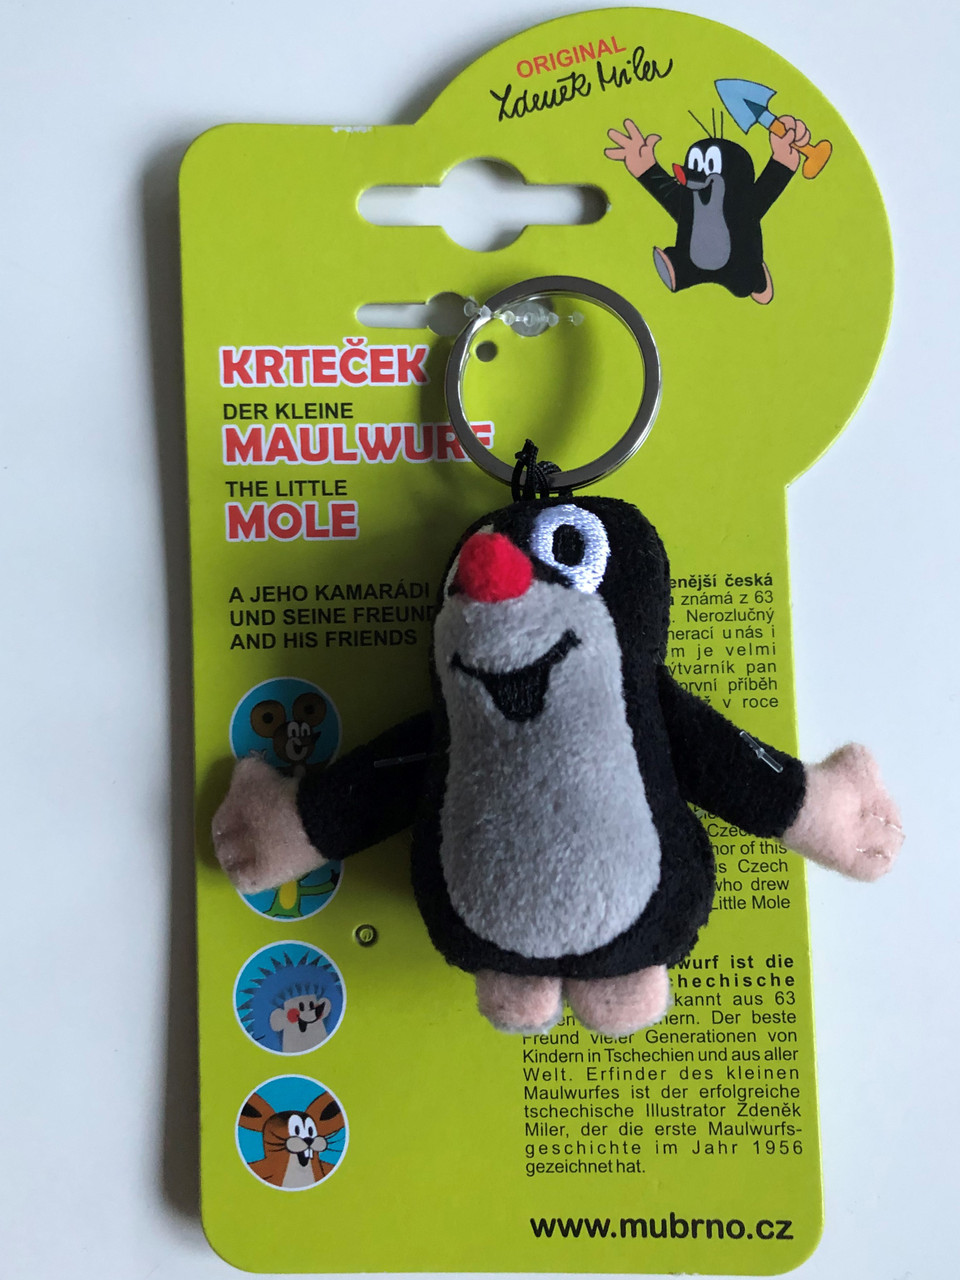 Krtek - Little Mole 6cm key ring / Krteček 6cm, kroužek / Maulwurf 6cm  Schlüsselring / 35955Z / Kisvakond 6cm kulcstartó - bibleinmylanguage